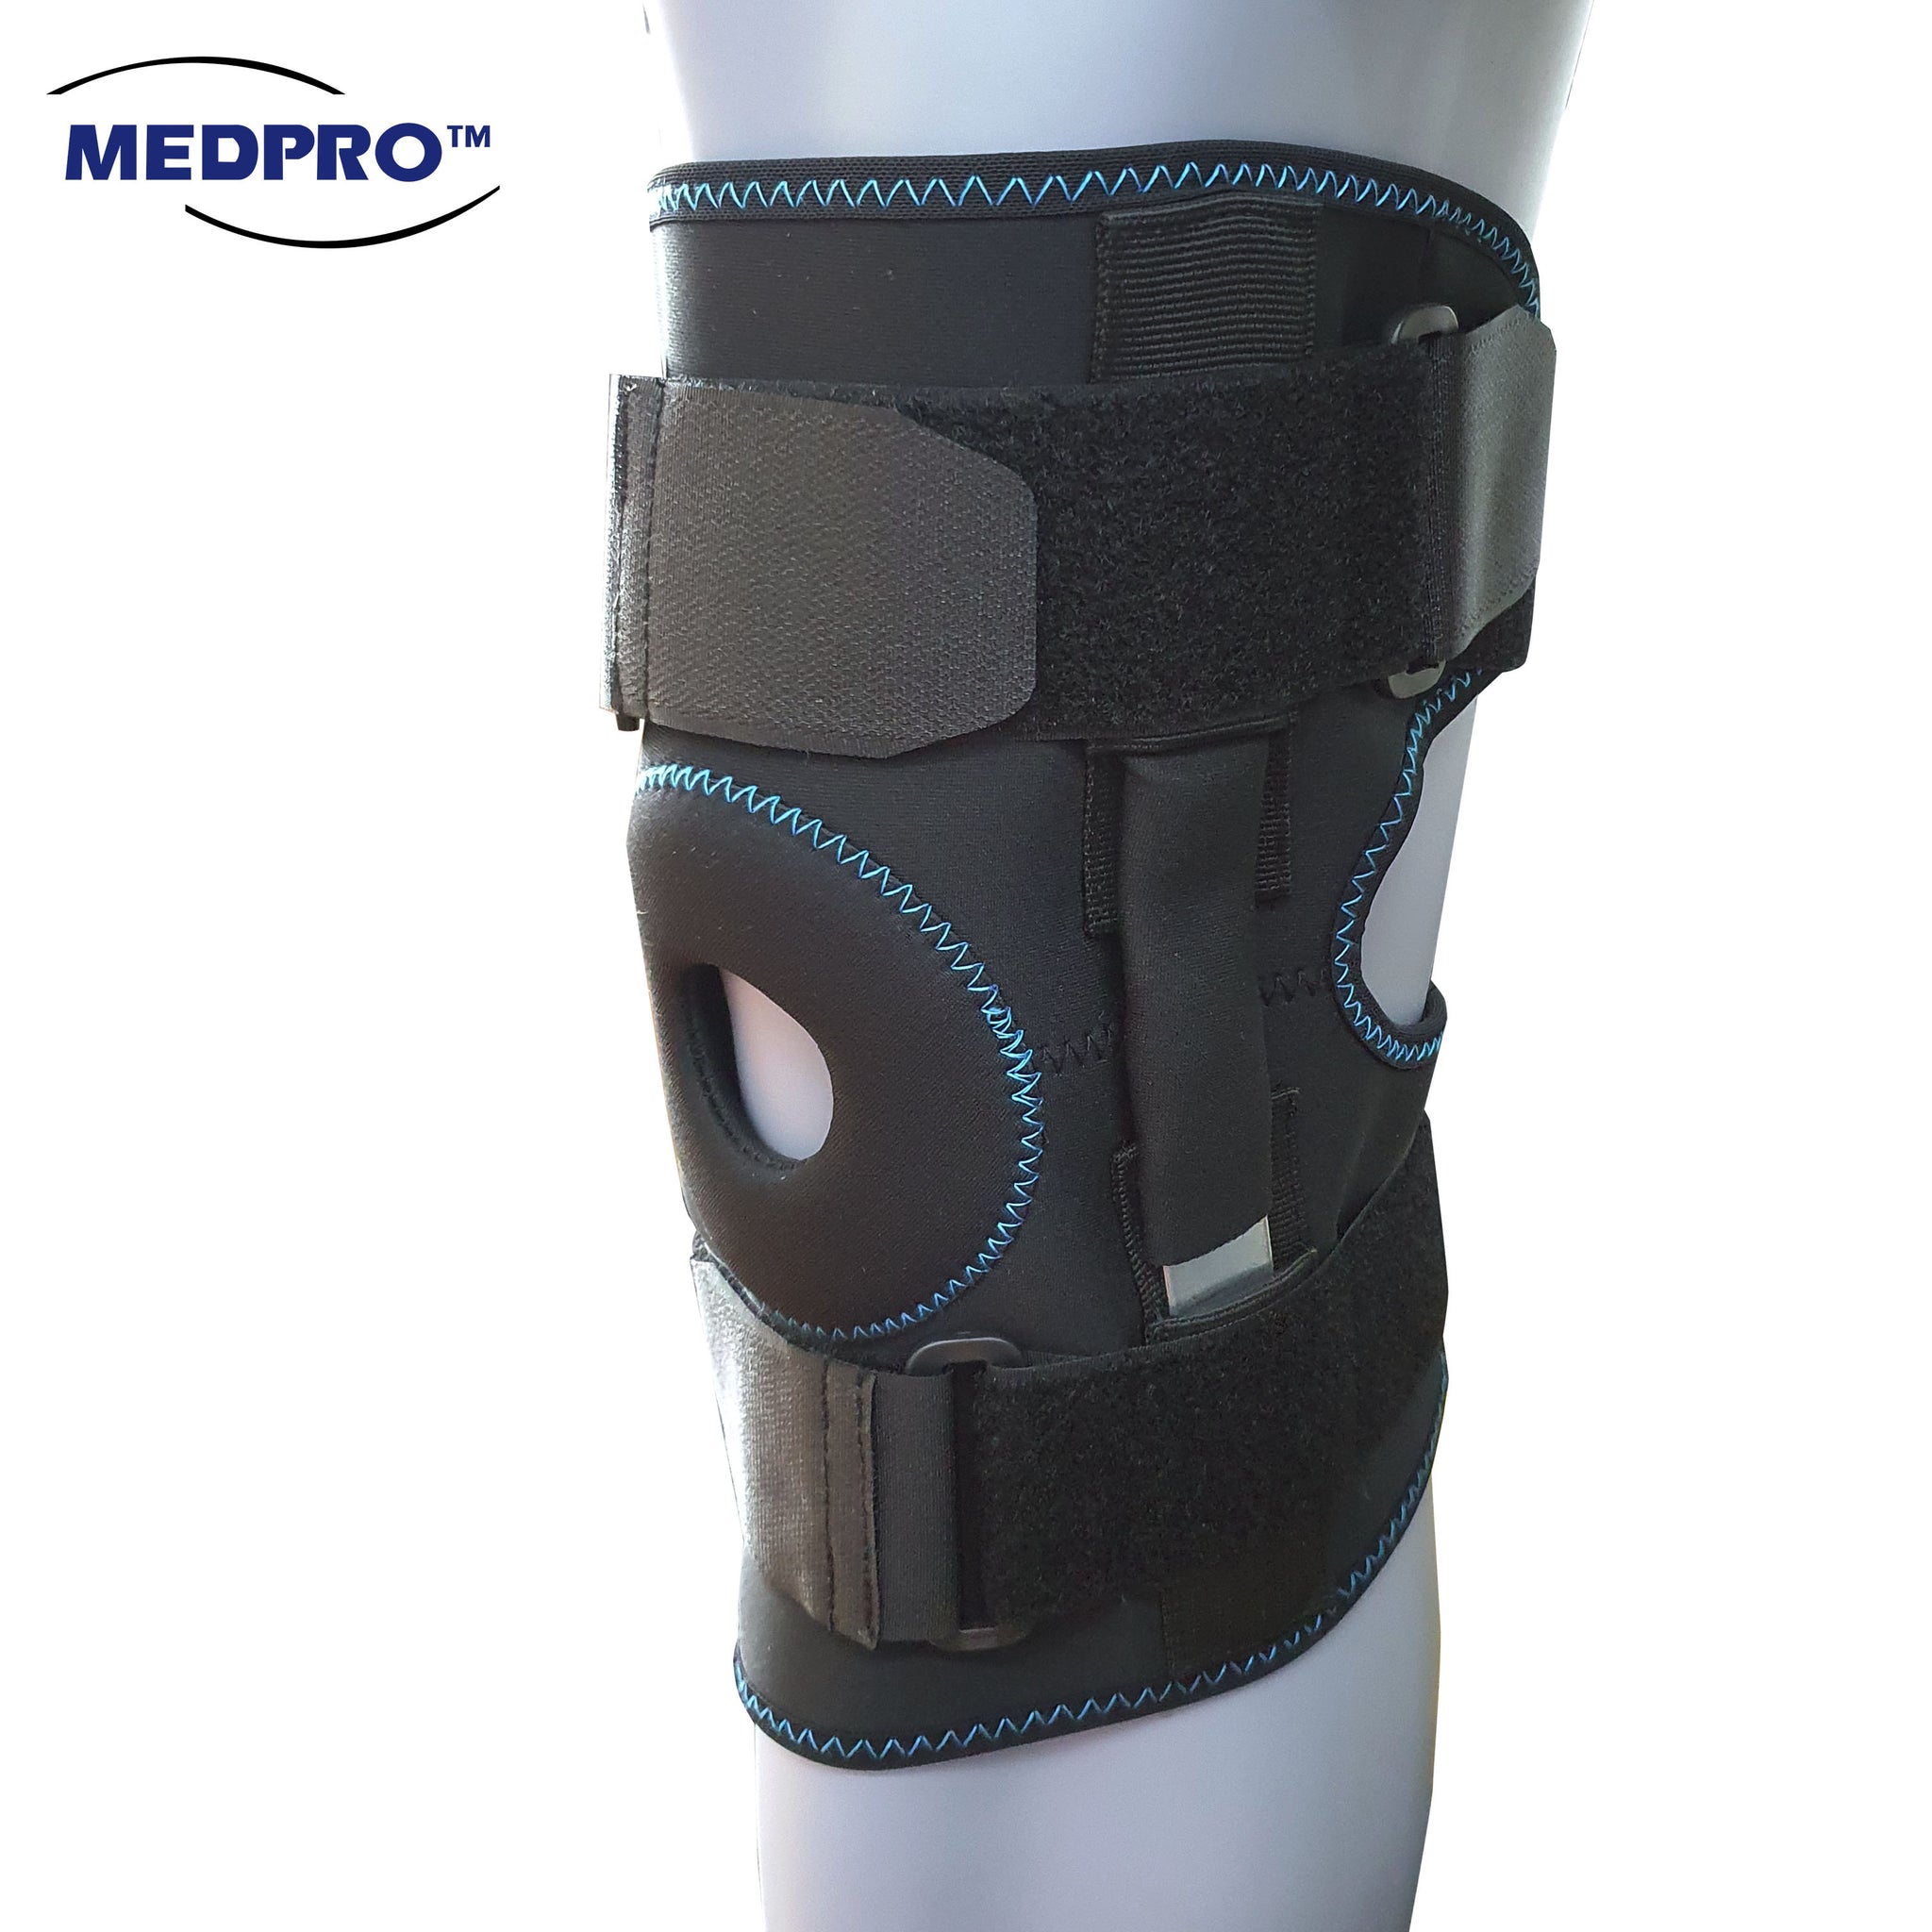  Hinged Knee Brace, Adjustable Knee Immobilizer Support